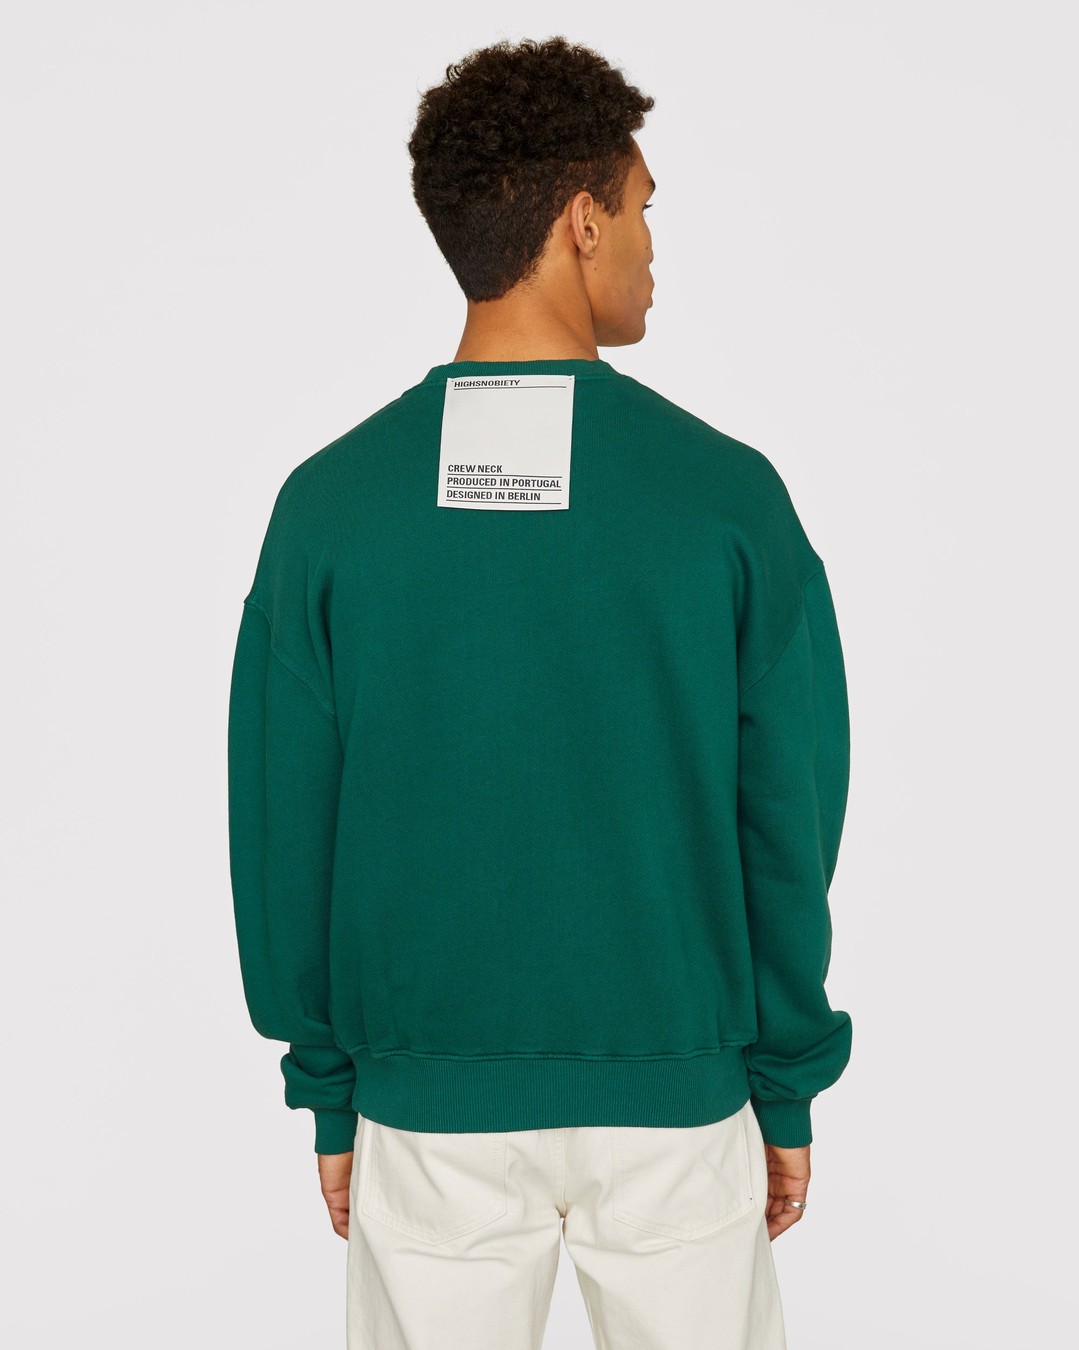 Highsnobiety – Staples Sweatshirt Green | Highsnobiety Shop